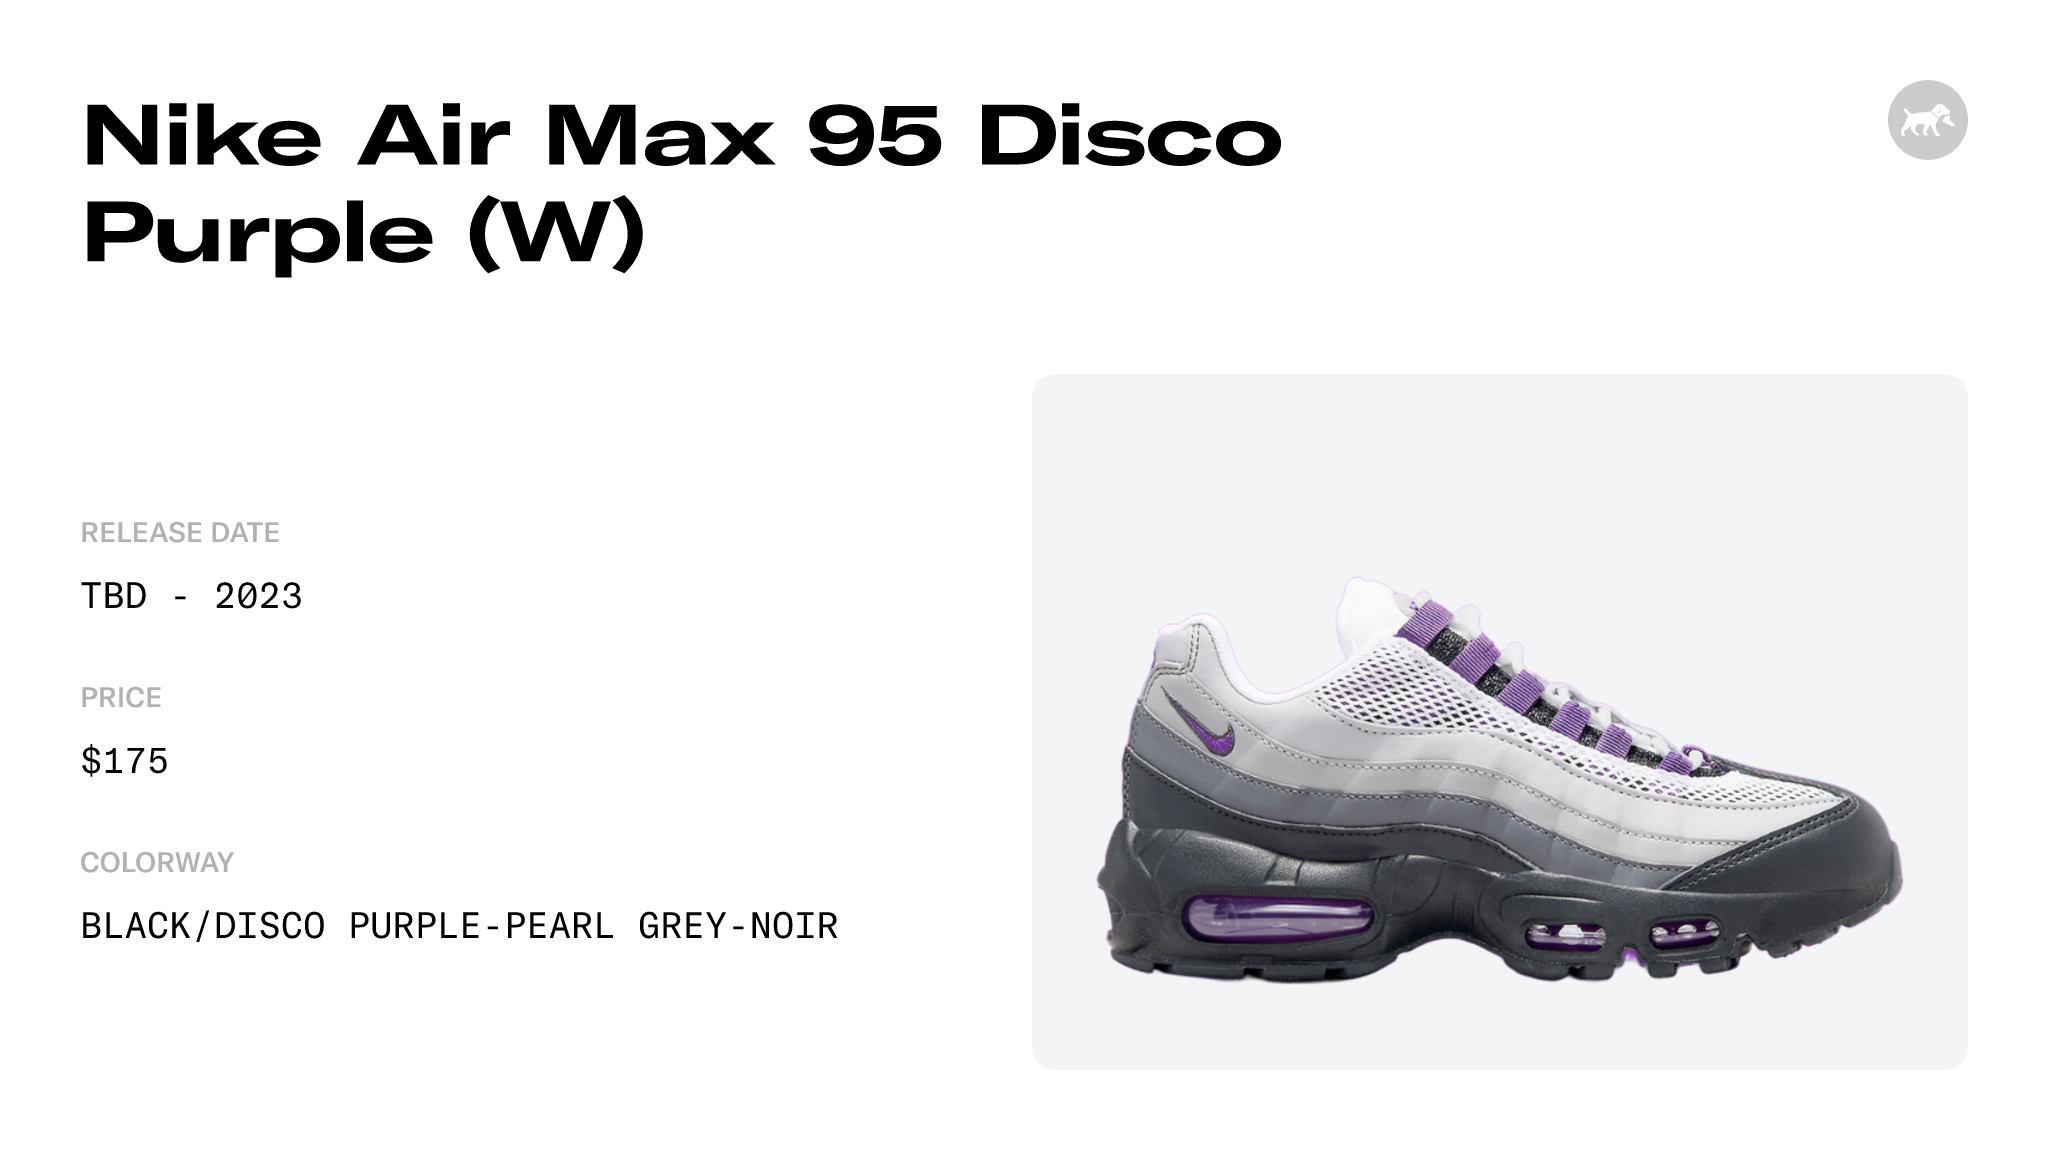 Nike Air Max 95 Disco Purple (W) - DH8015-003 Raffles and Release Date